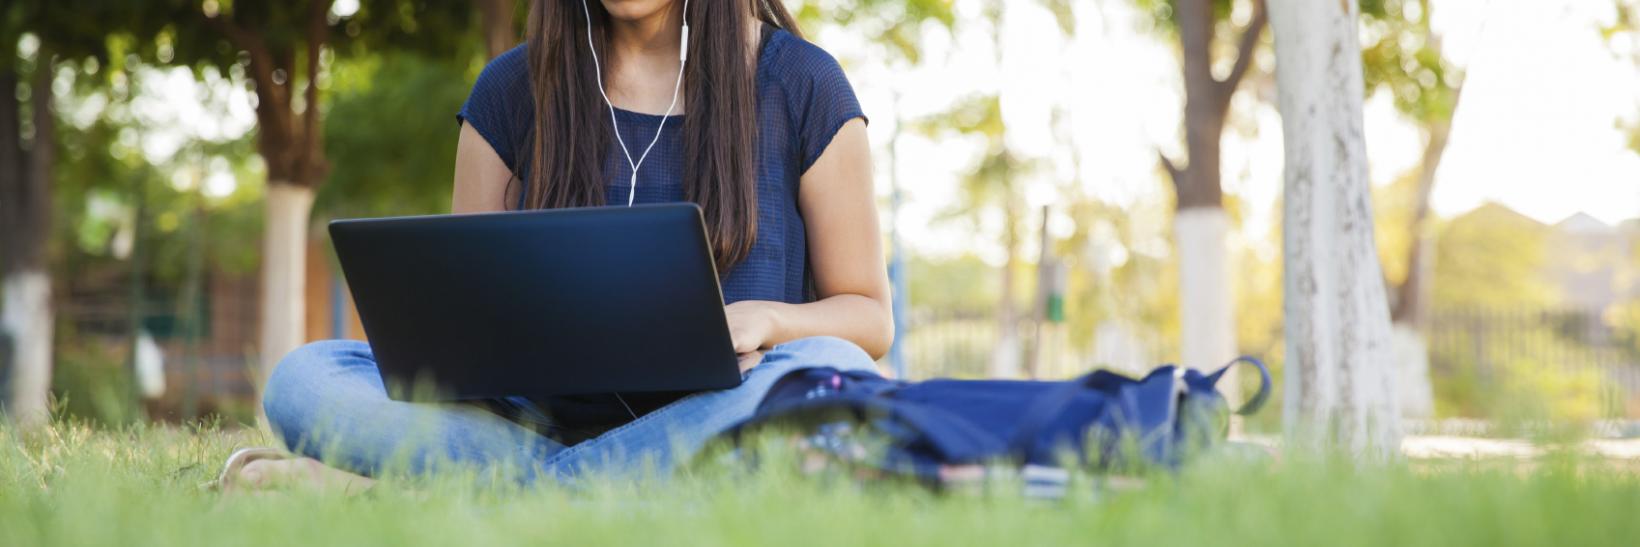 girl using a laptop outside